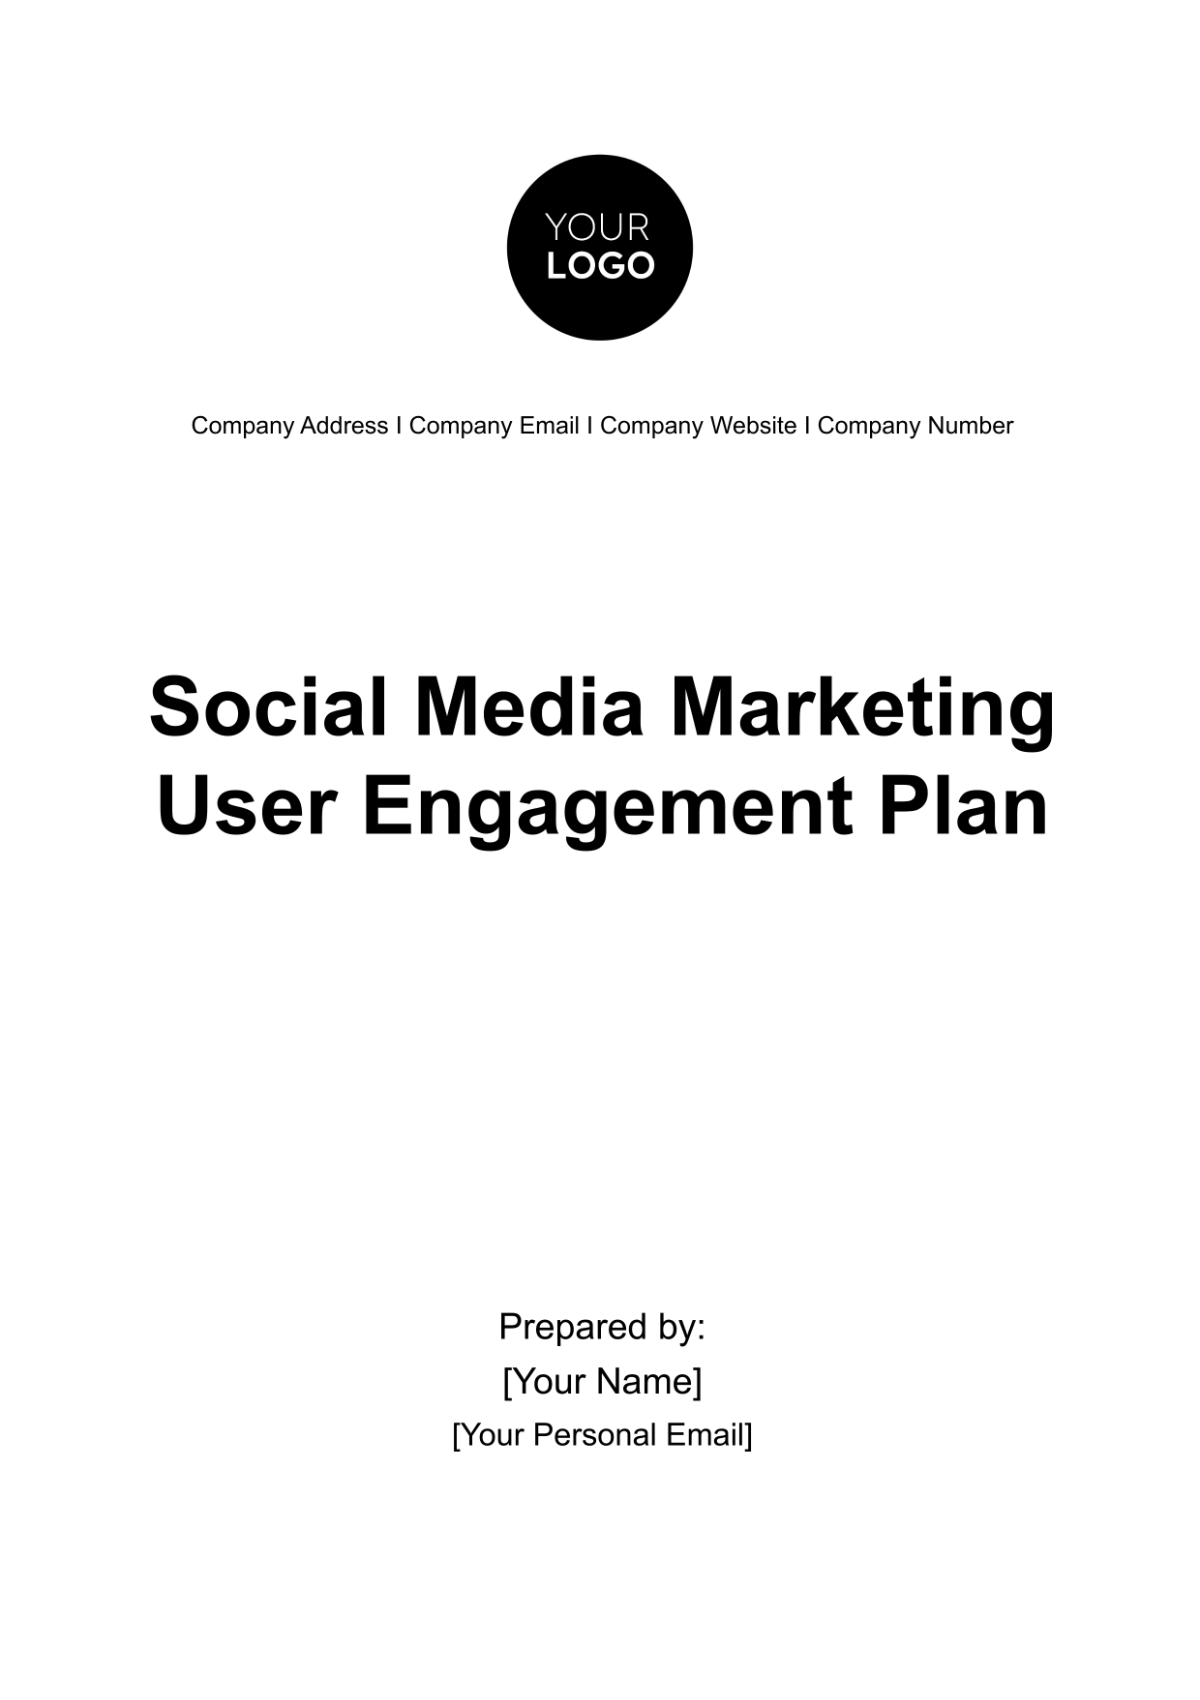 Social Media Marketing User Engagement Plan Template